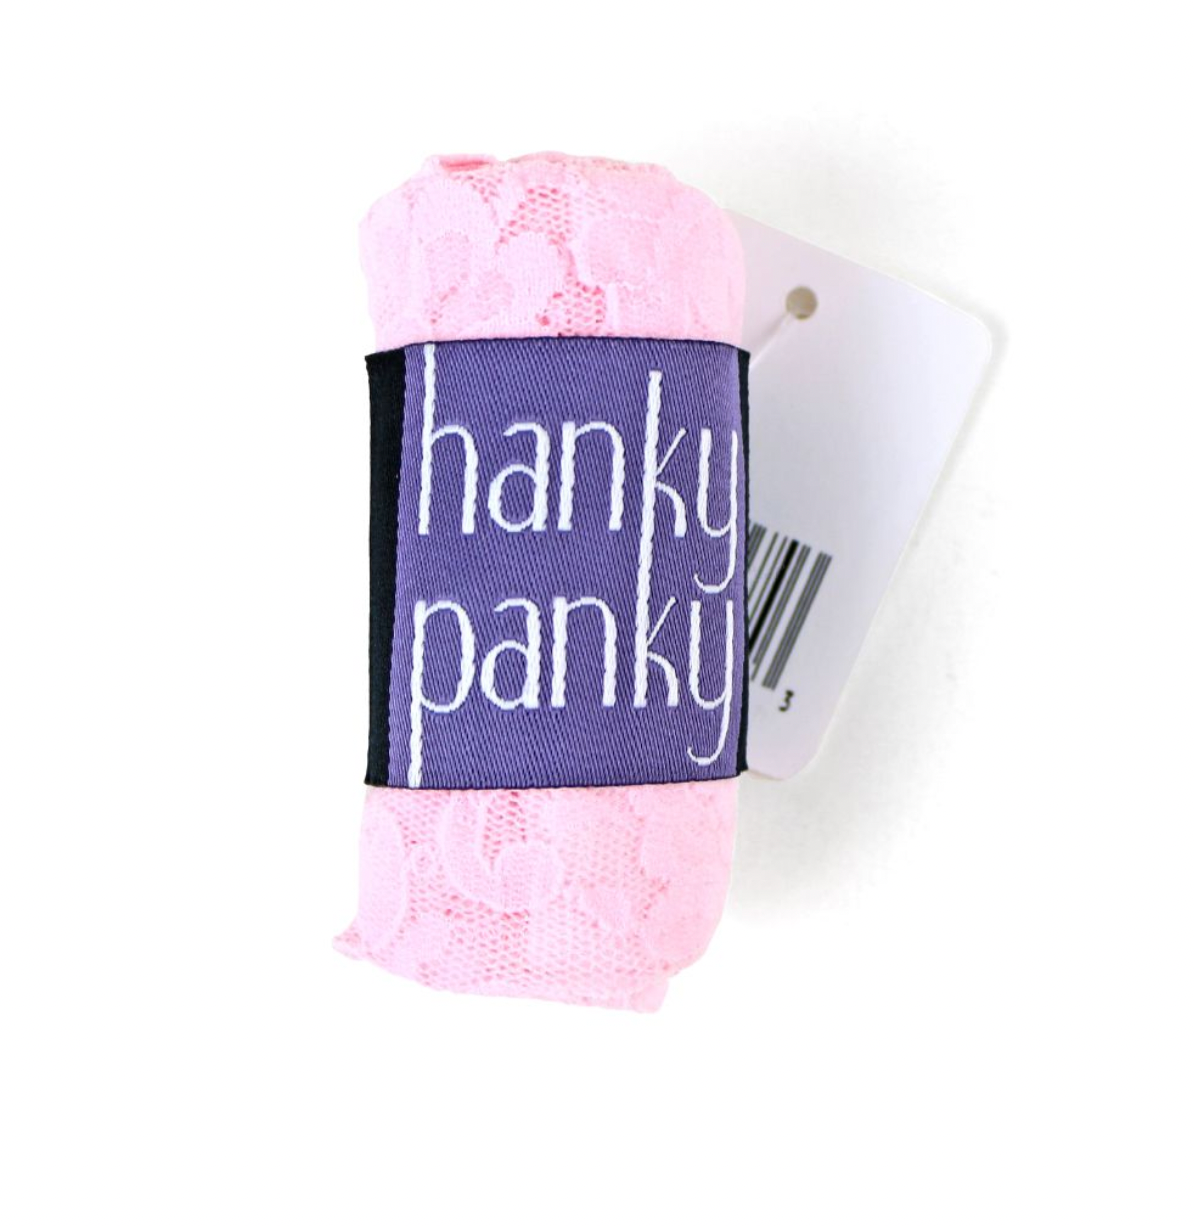 Hanky Panky Original Rise Signature Stretch Lace Thong